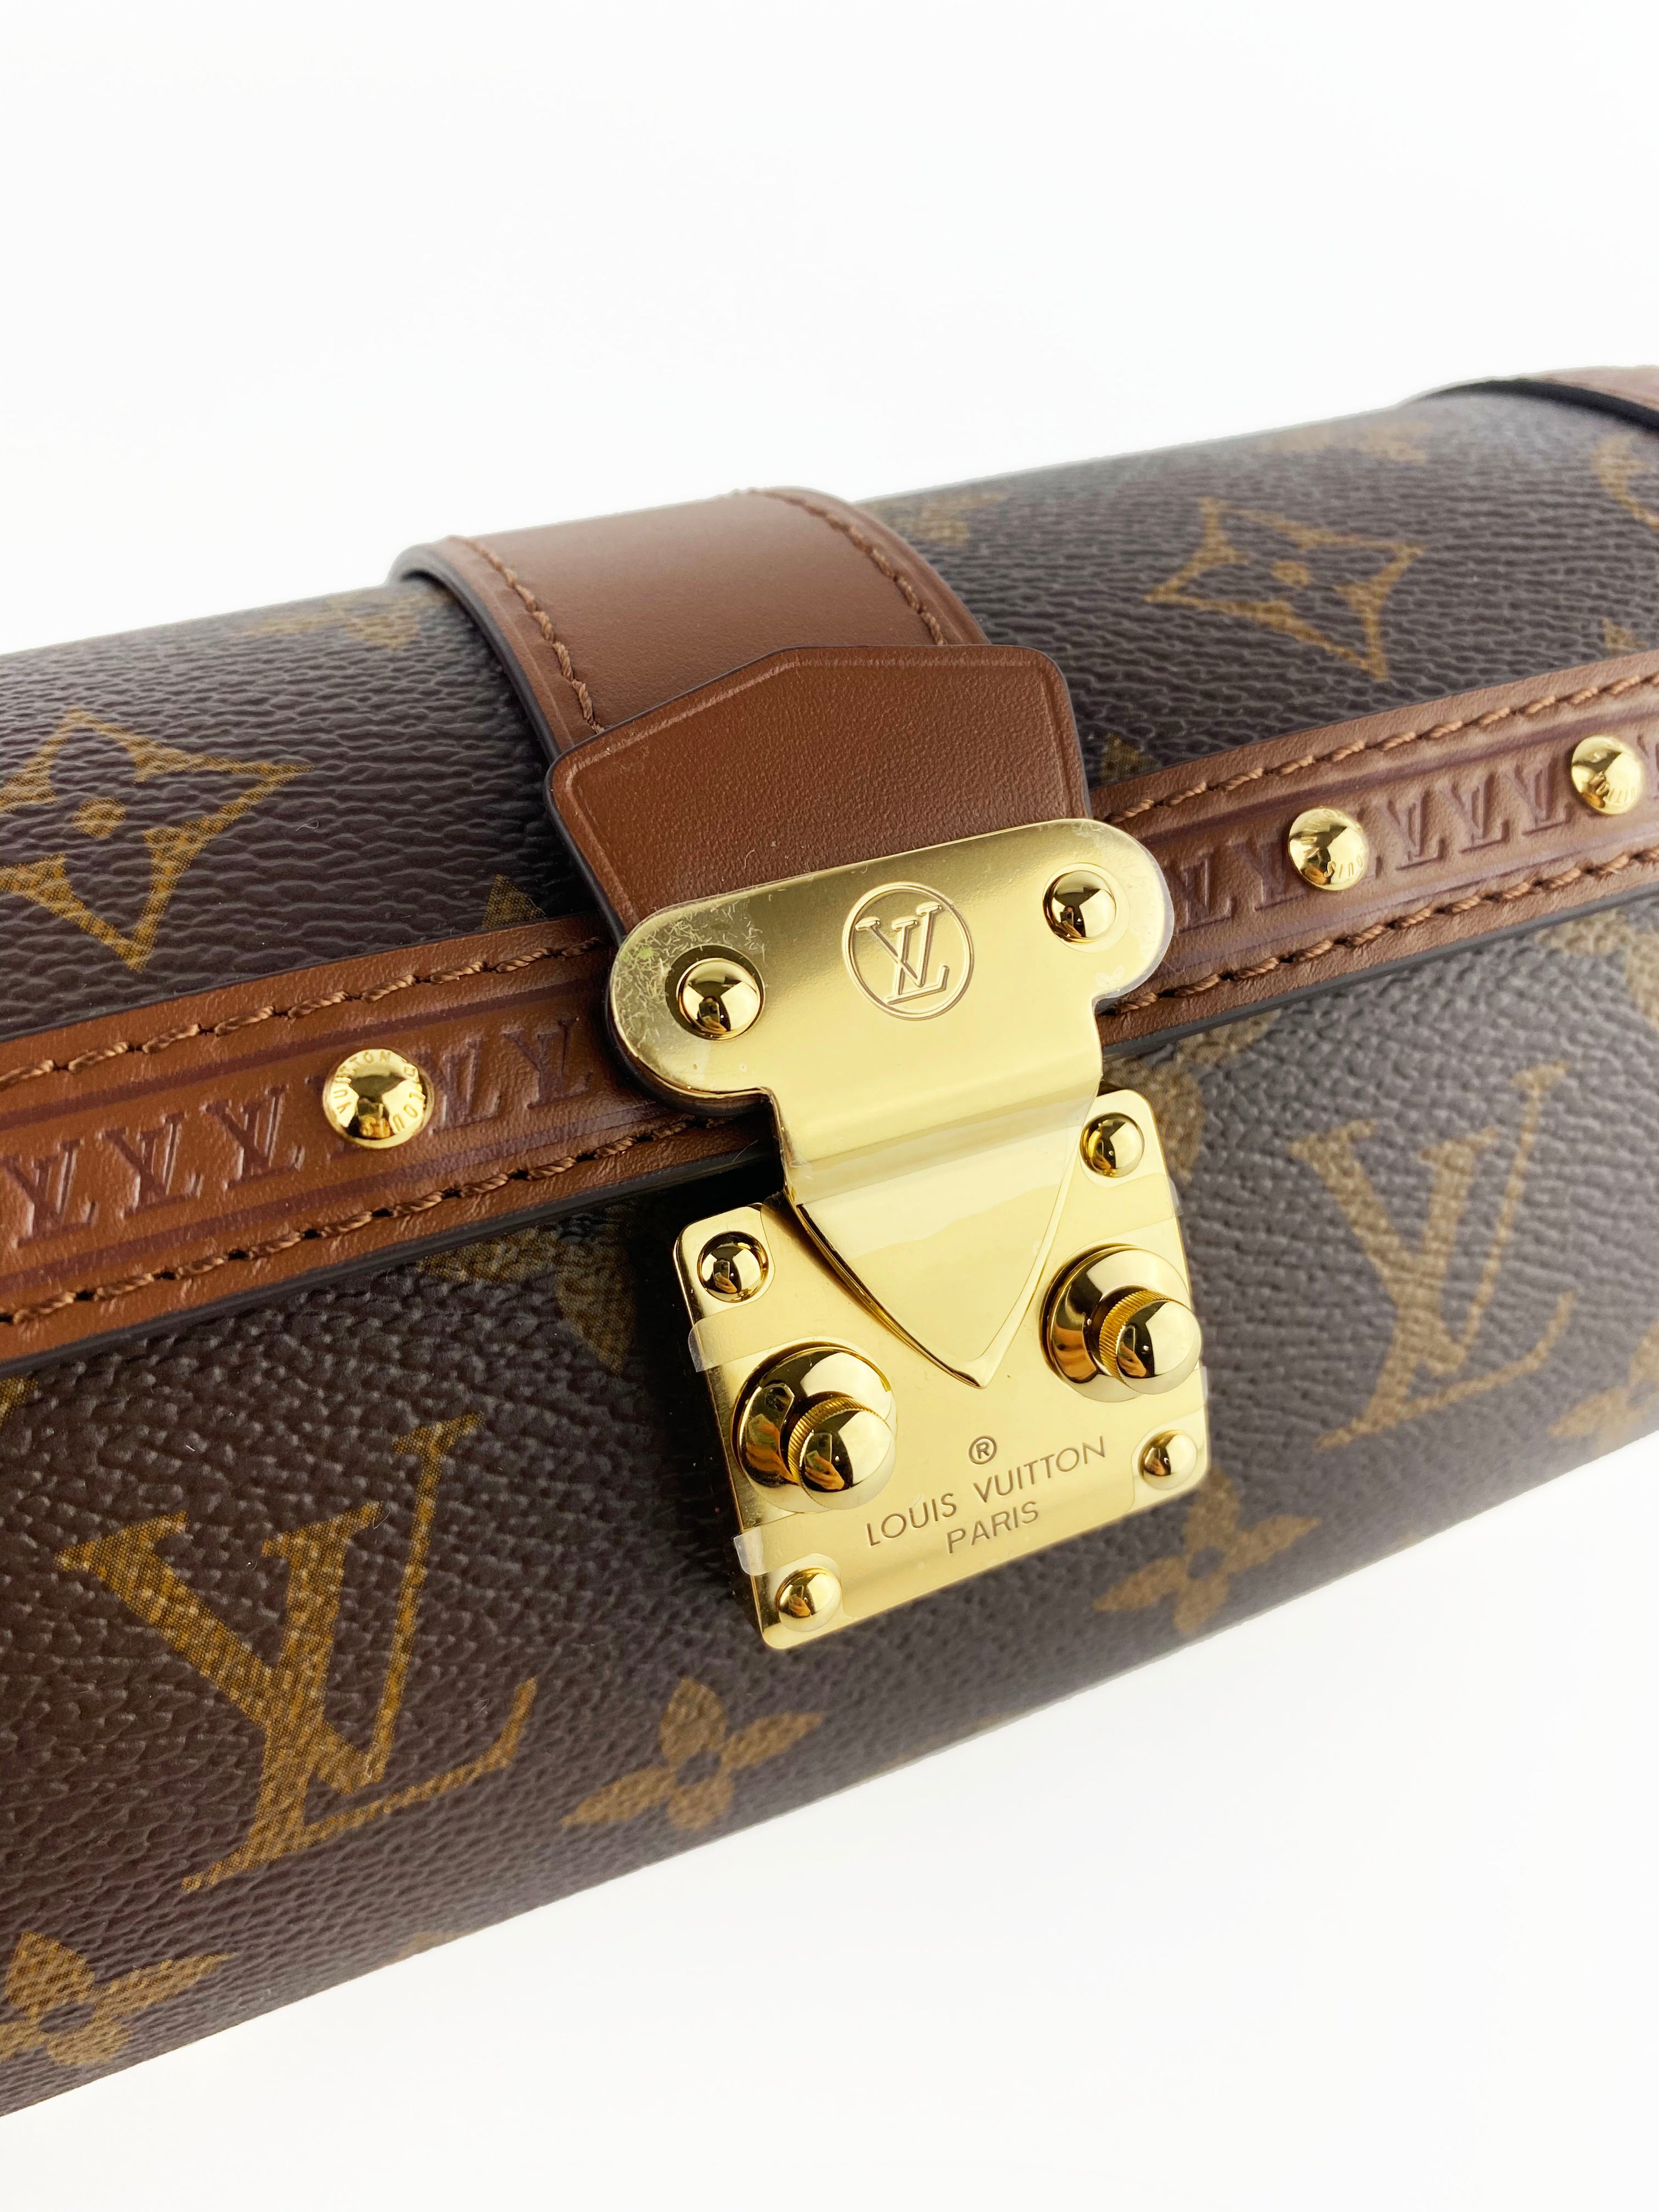 Louis Vuitton Papillon Trunk Bag